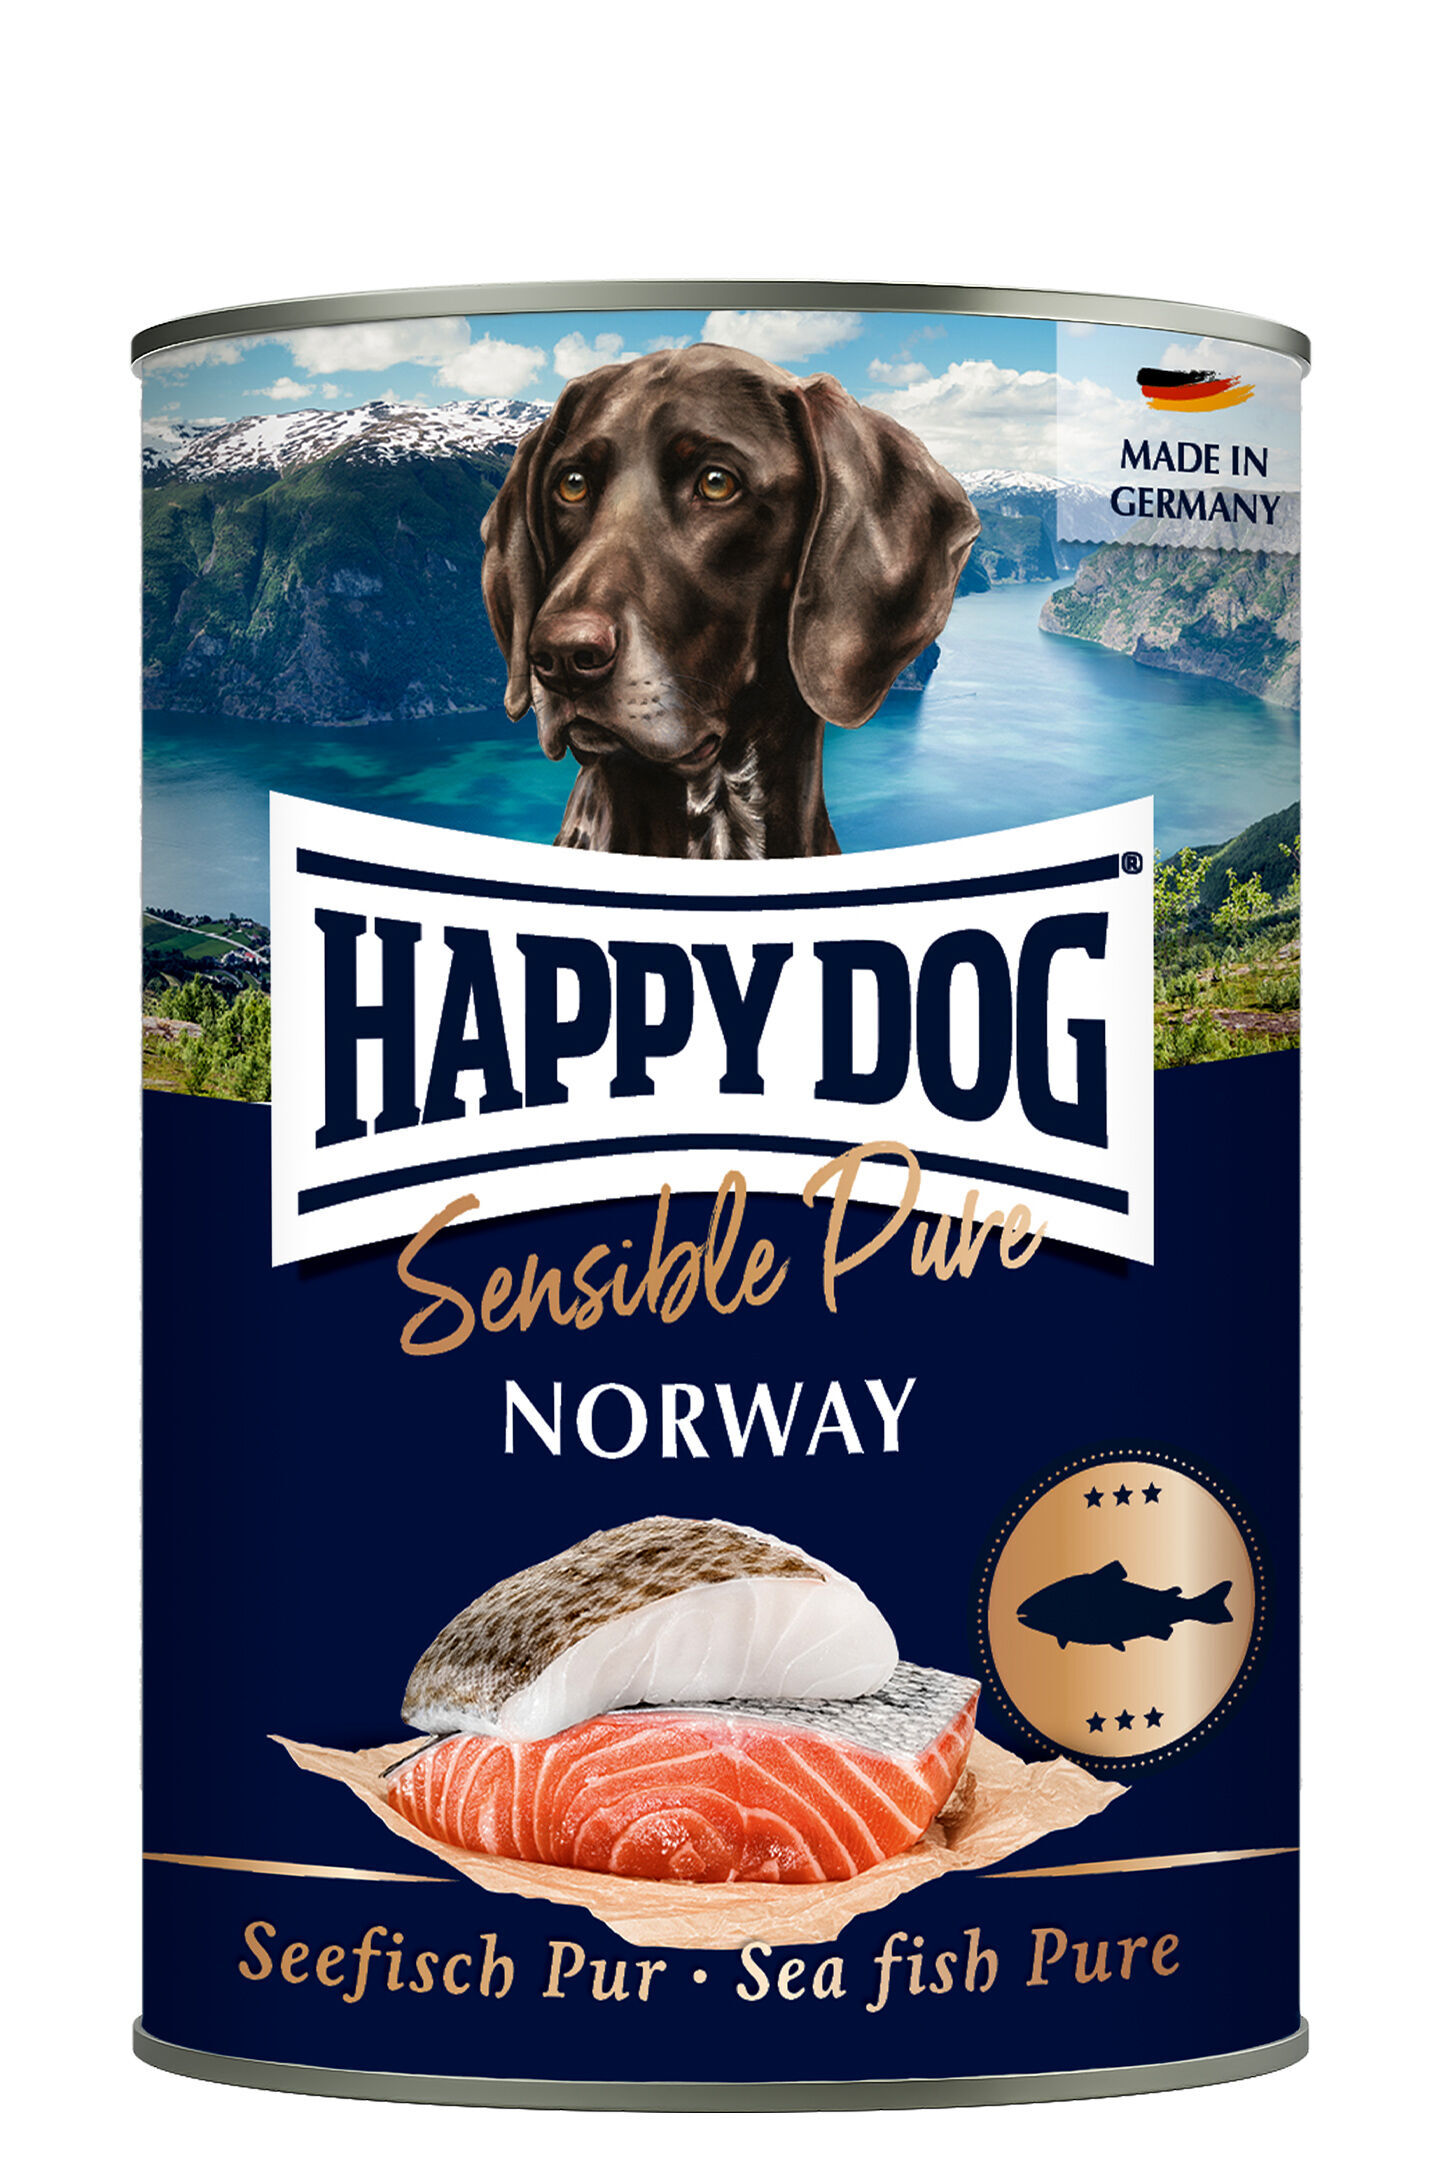 Sensible Pure Norway